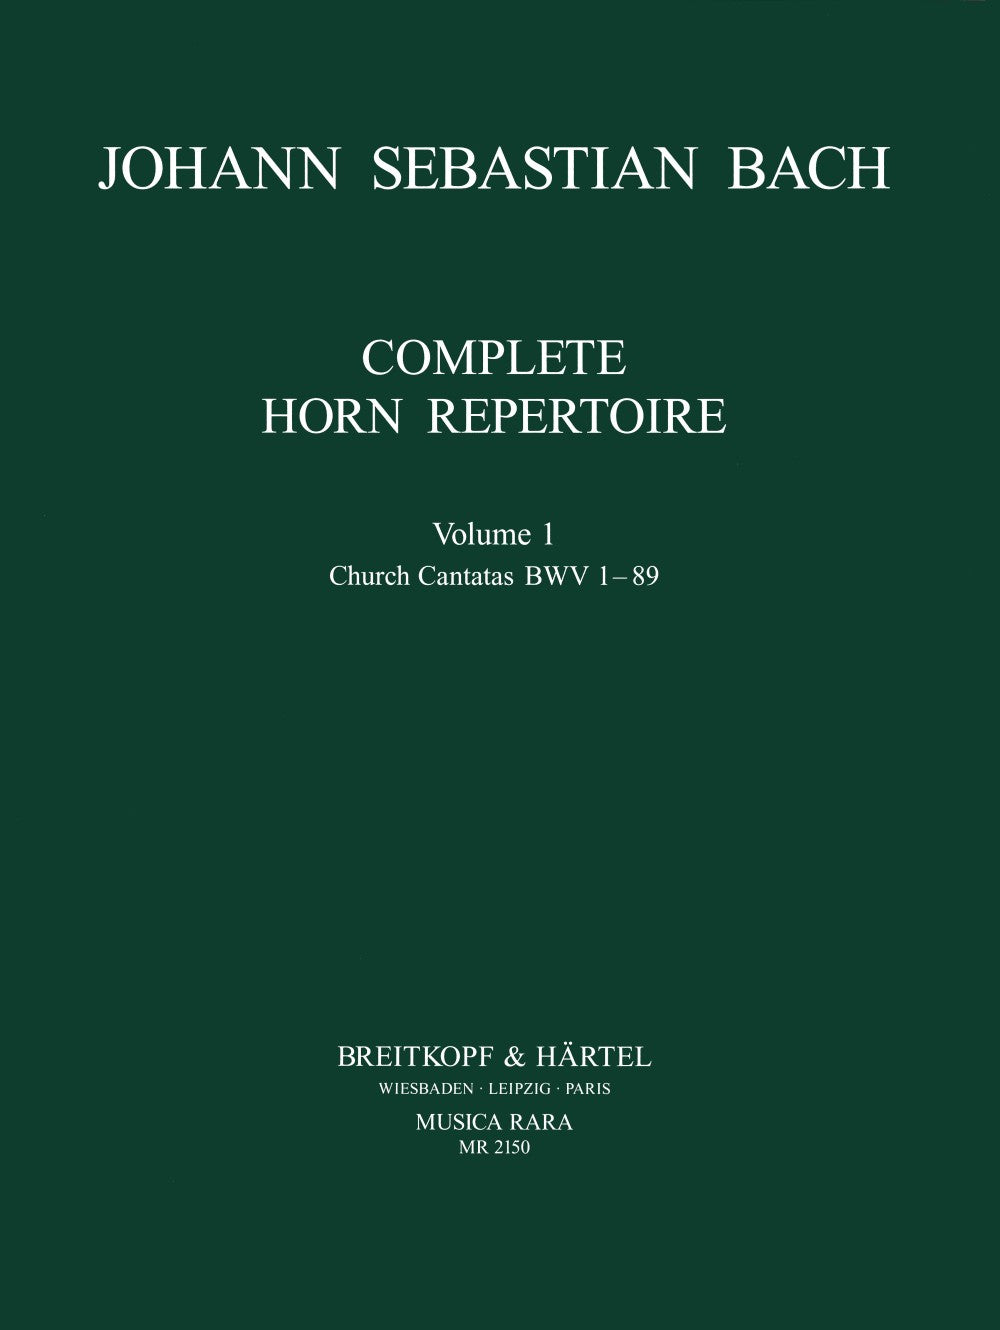 Bach: Complete Horn Repertoire - Volume 1